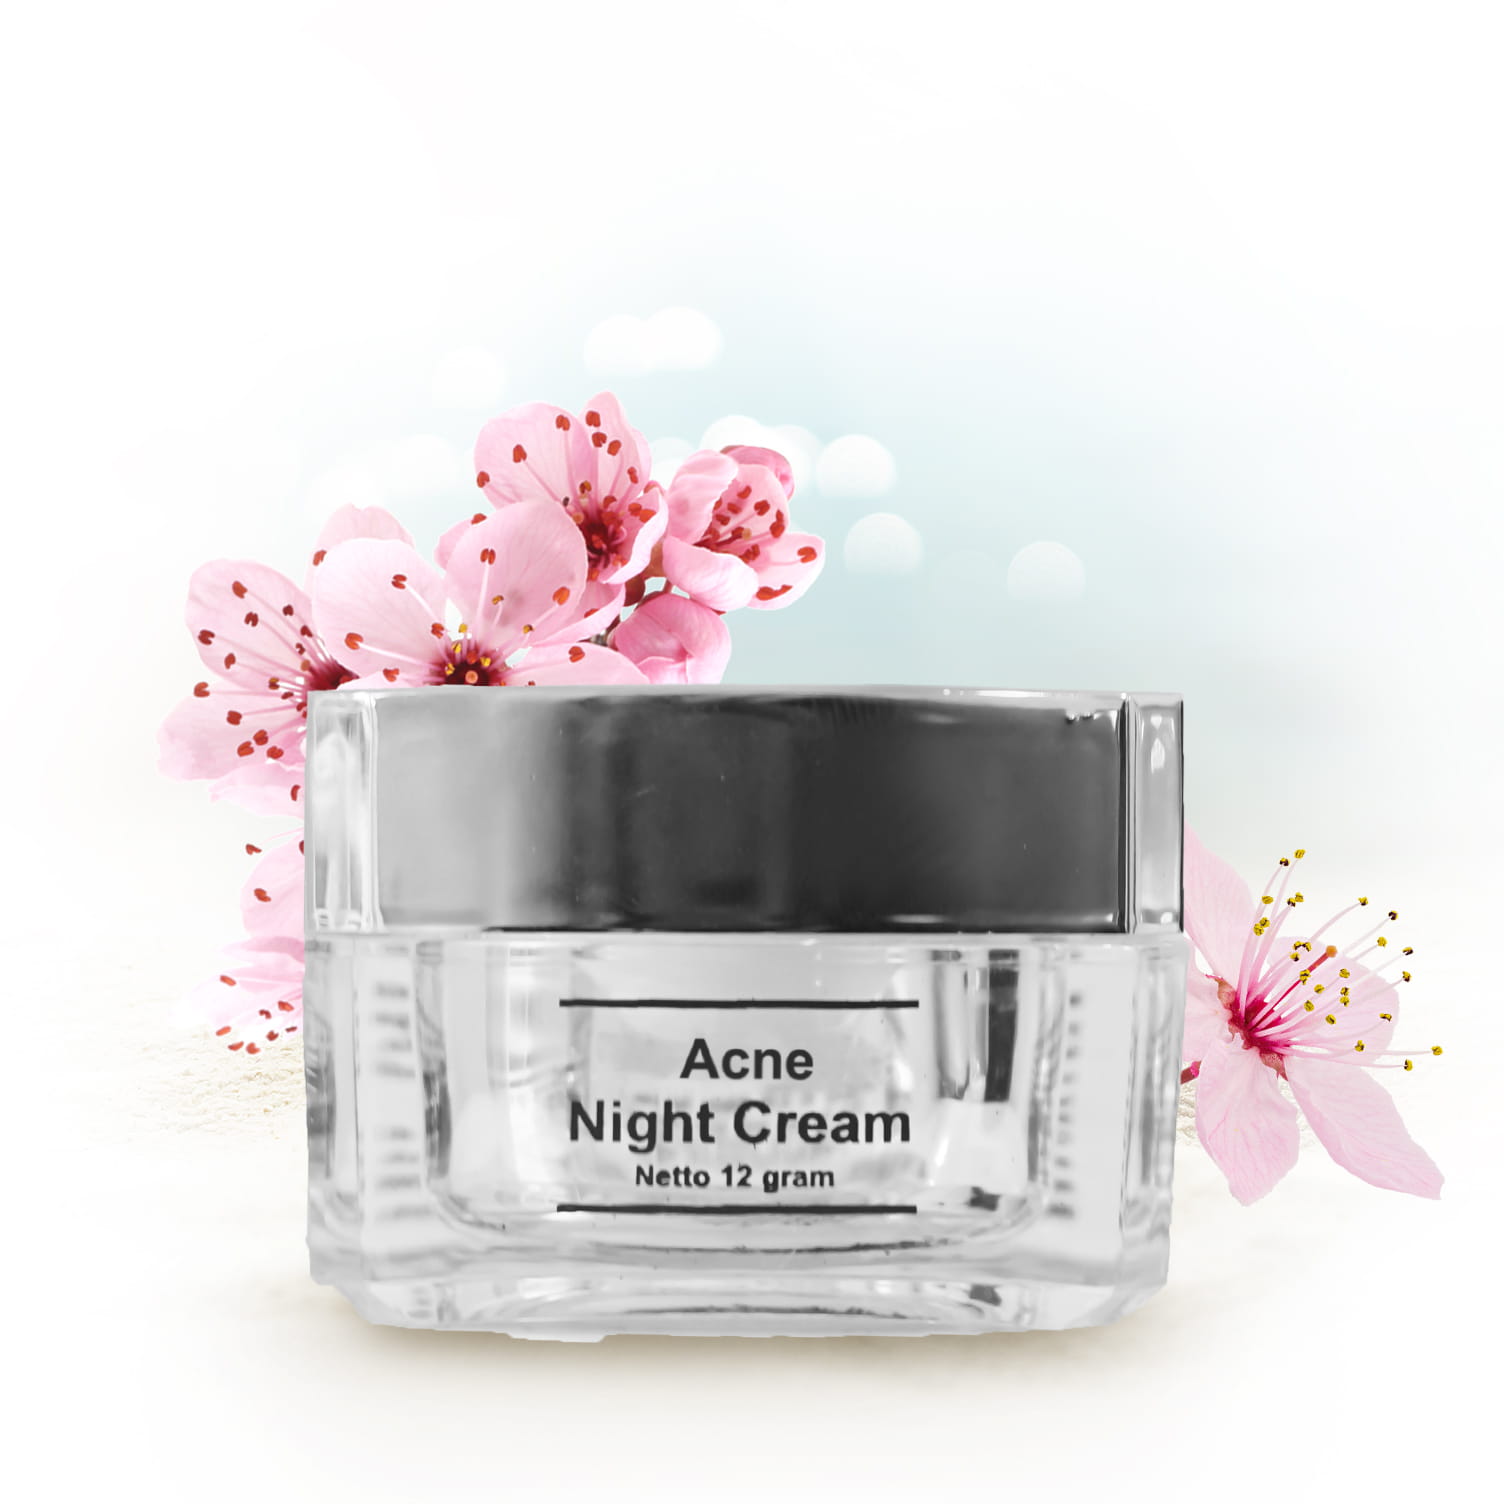 MS Glow Acne Night Cream